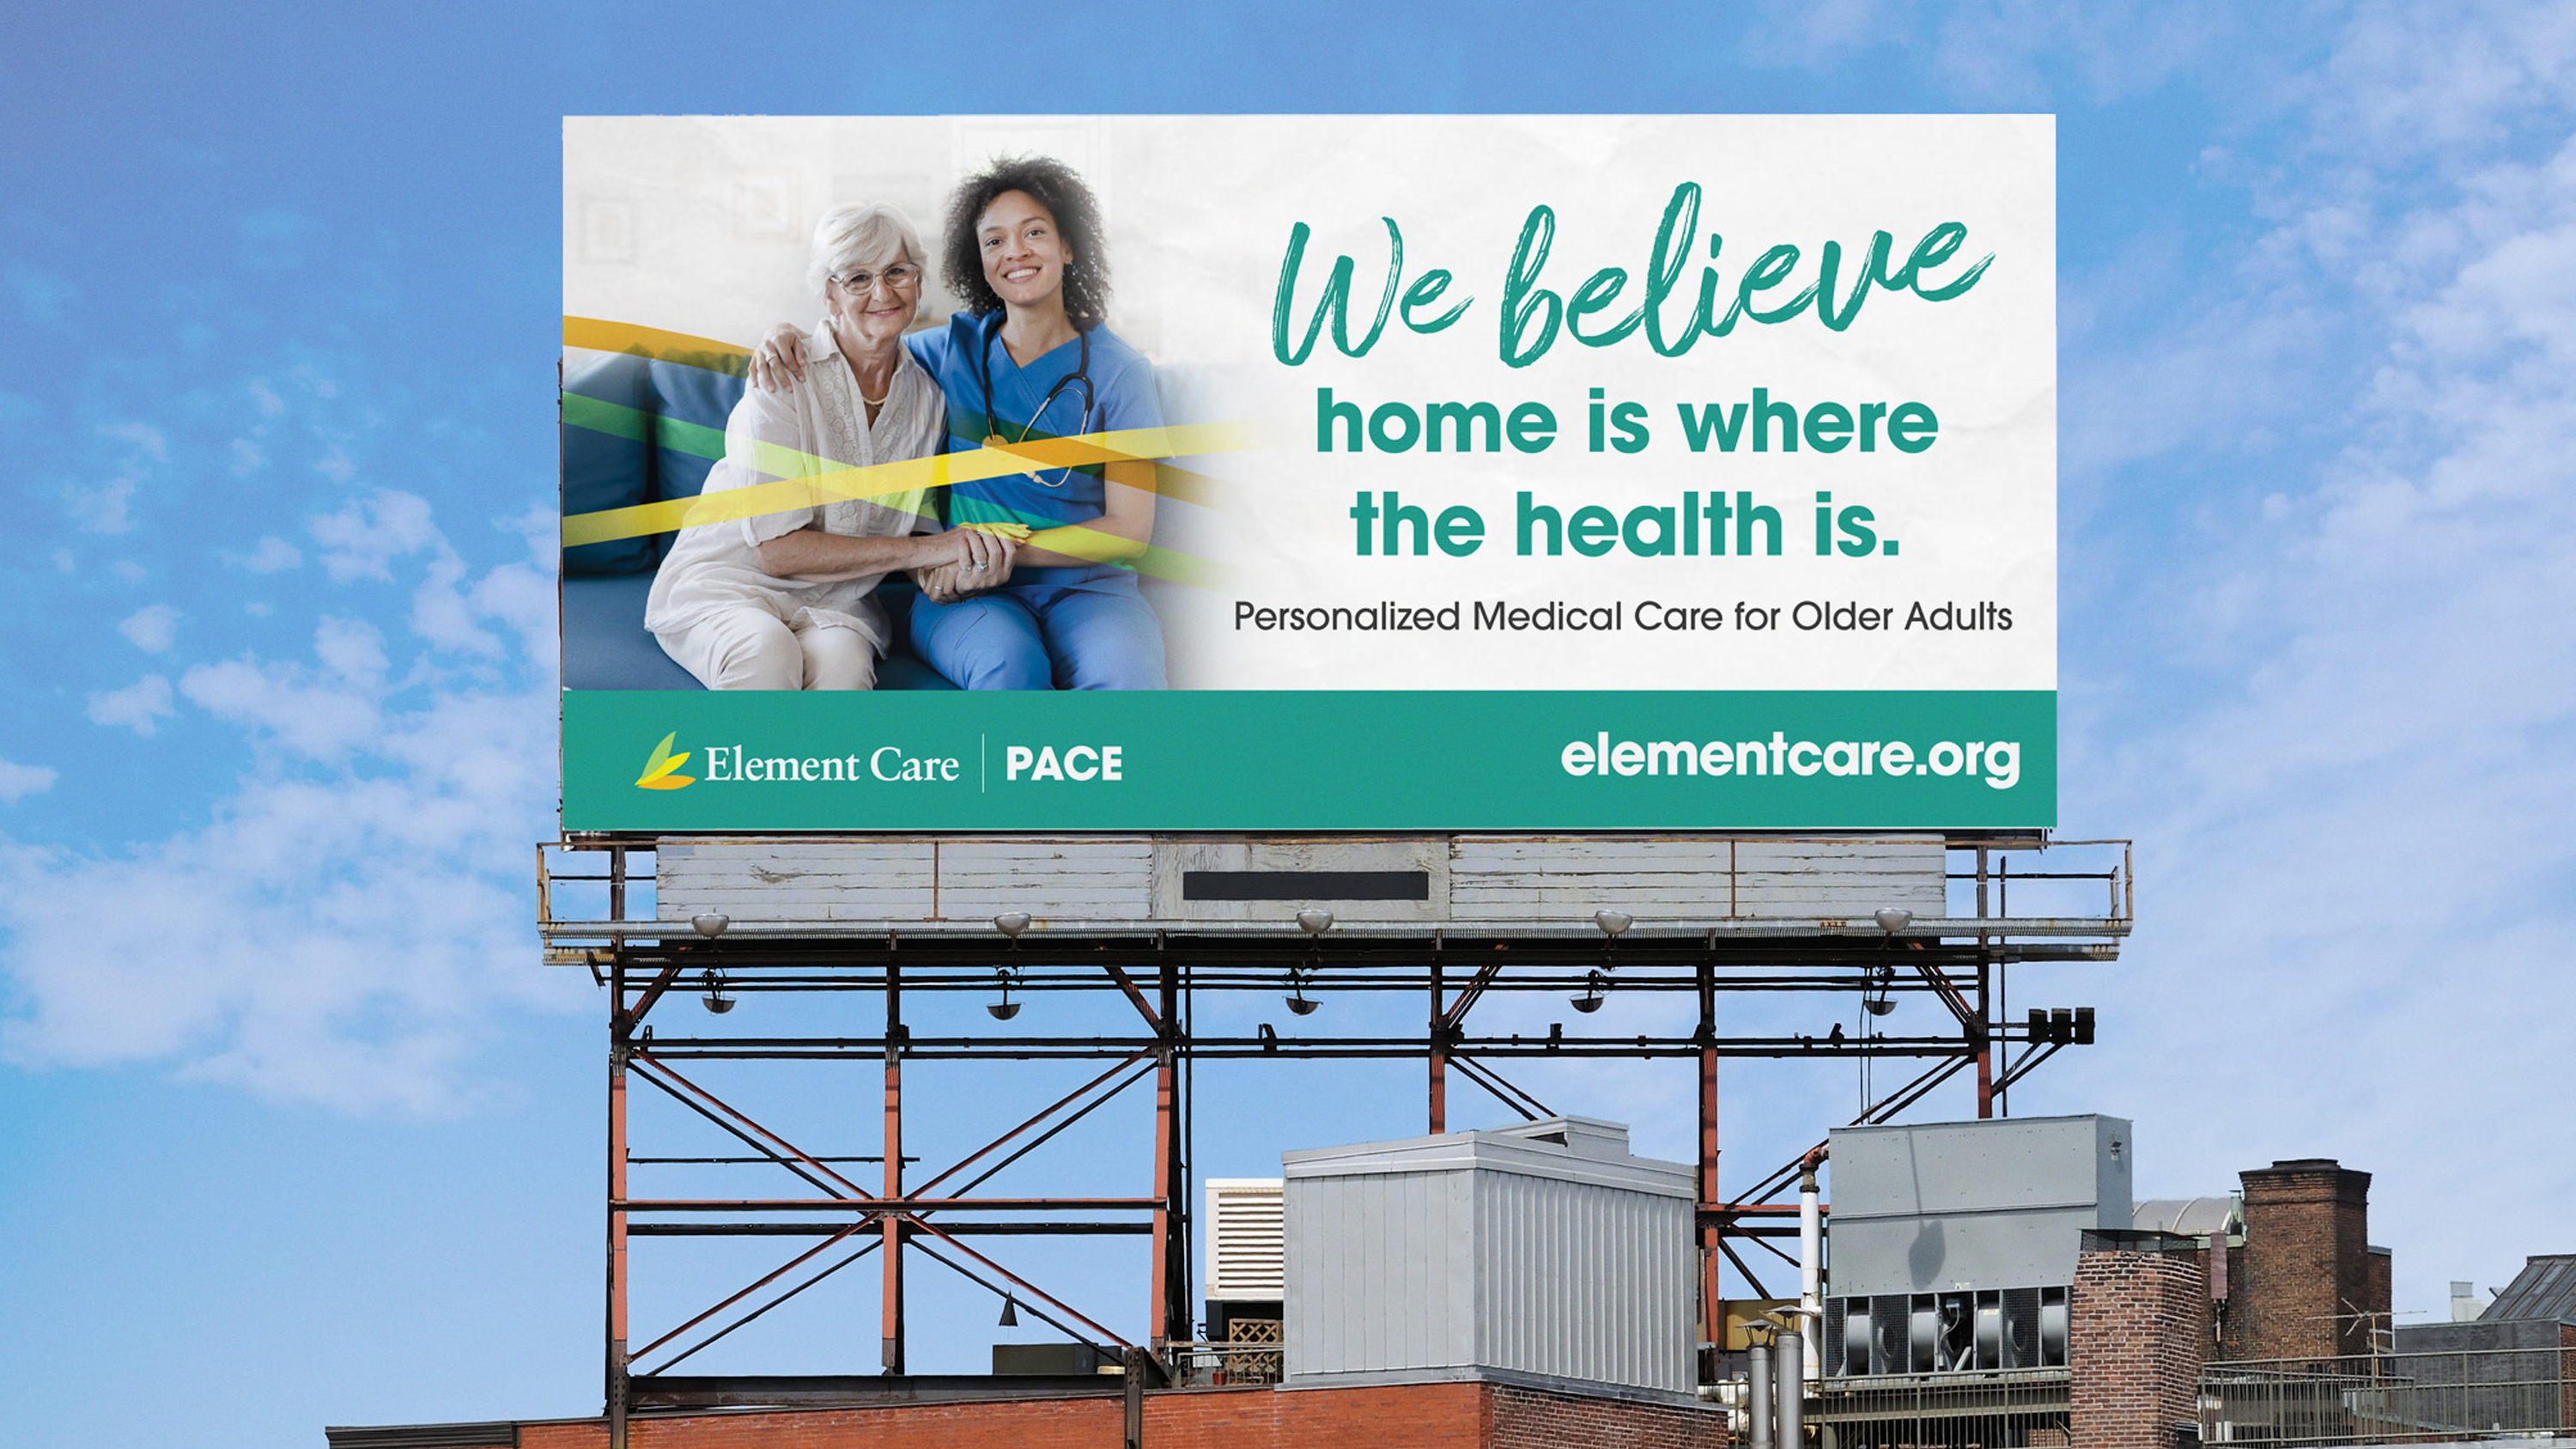 elementcare-billboard3